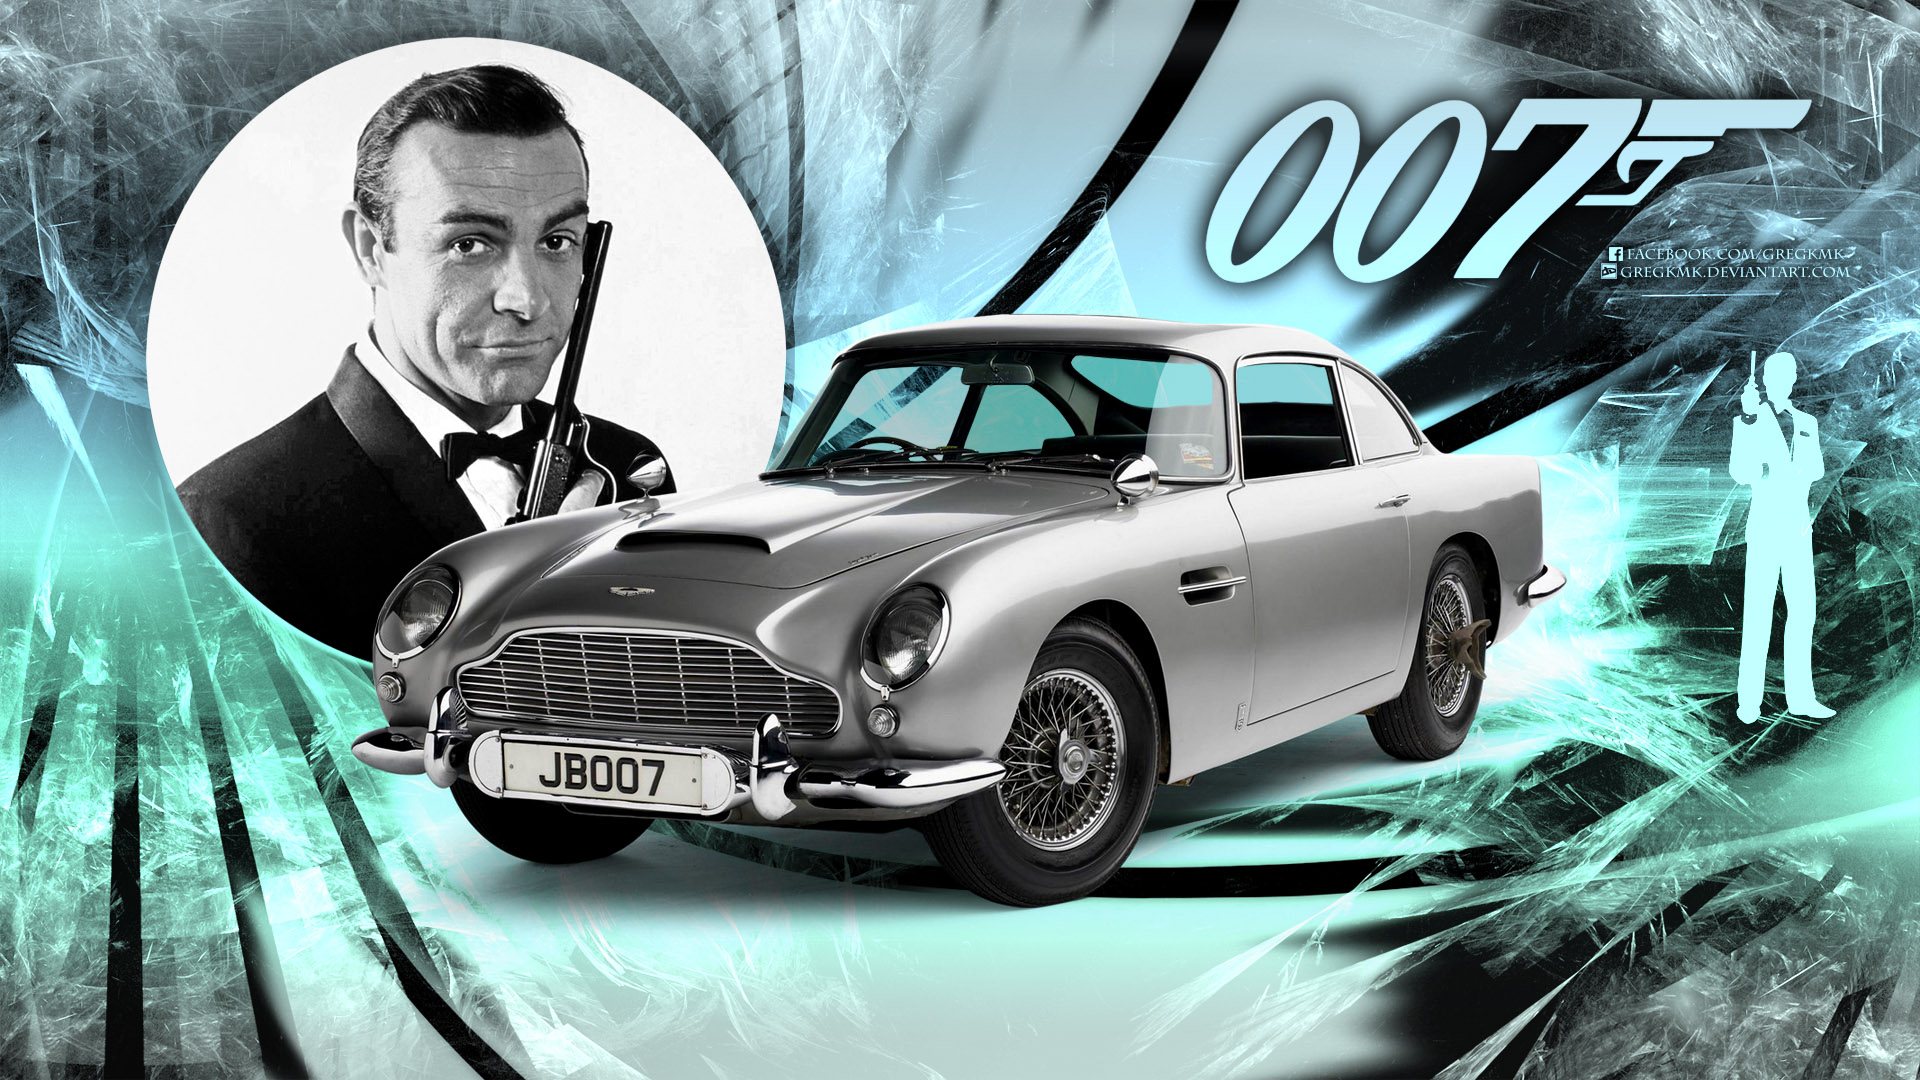 James Bond By Greg